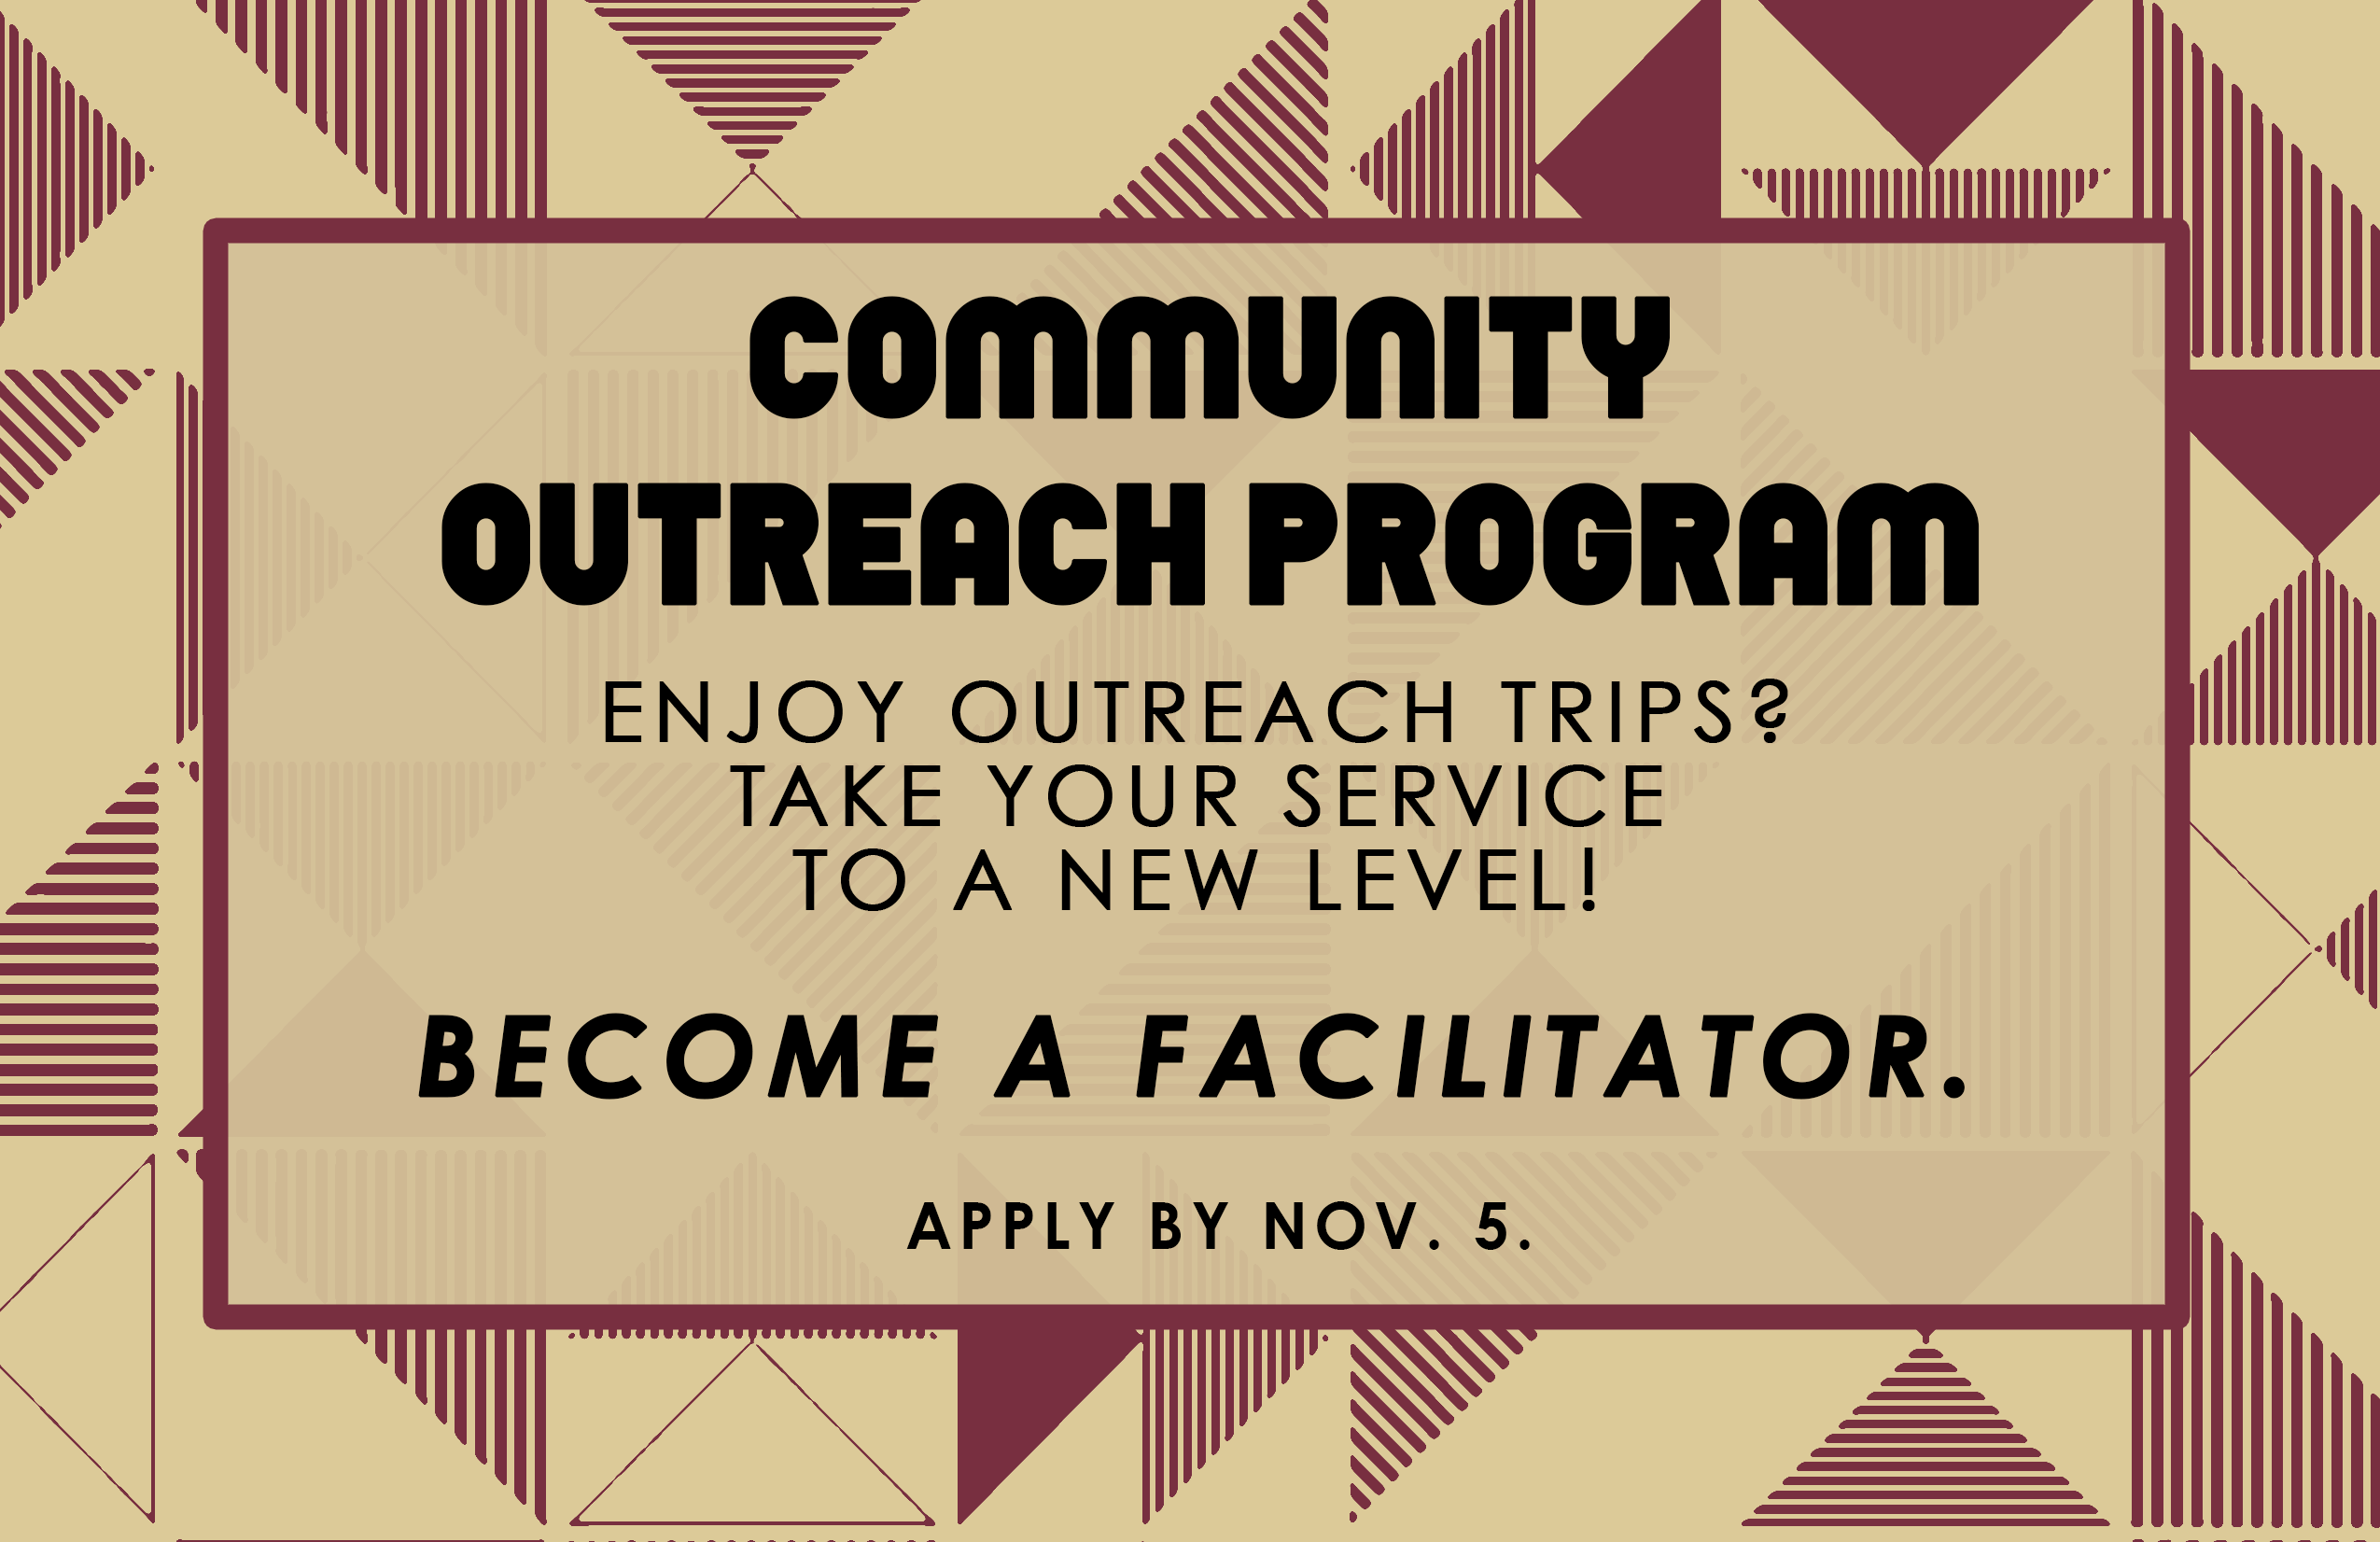 Community Outreach Program: Become a Facilitator, Apply by November 5